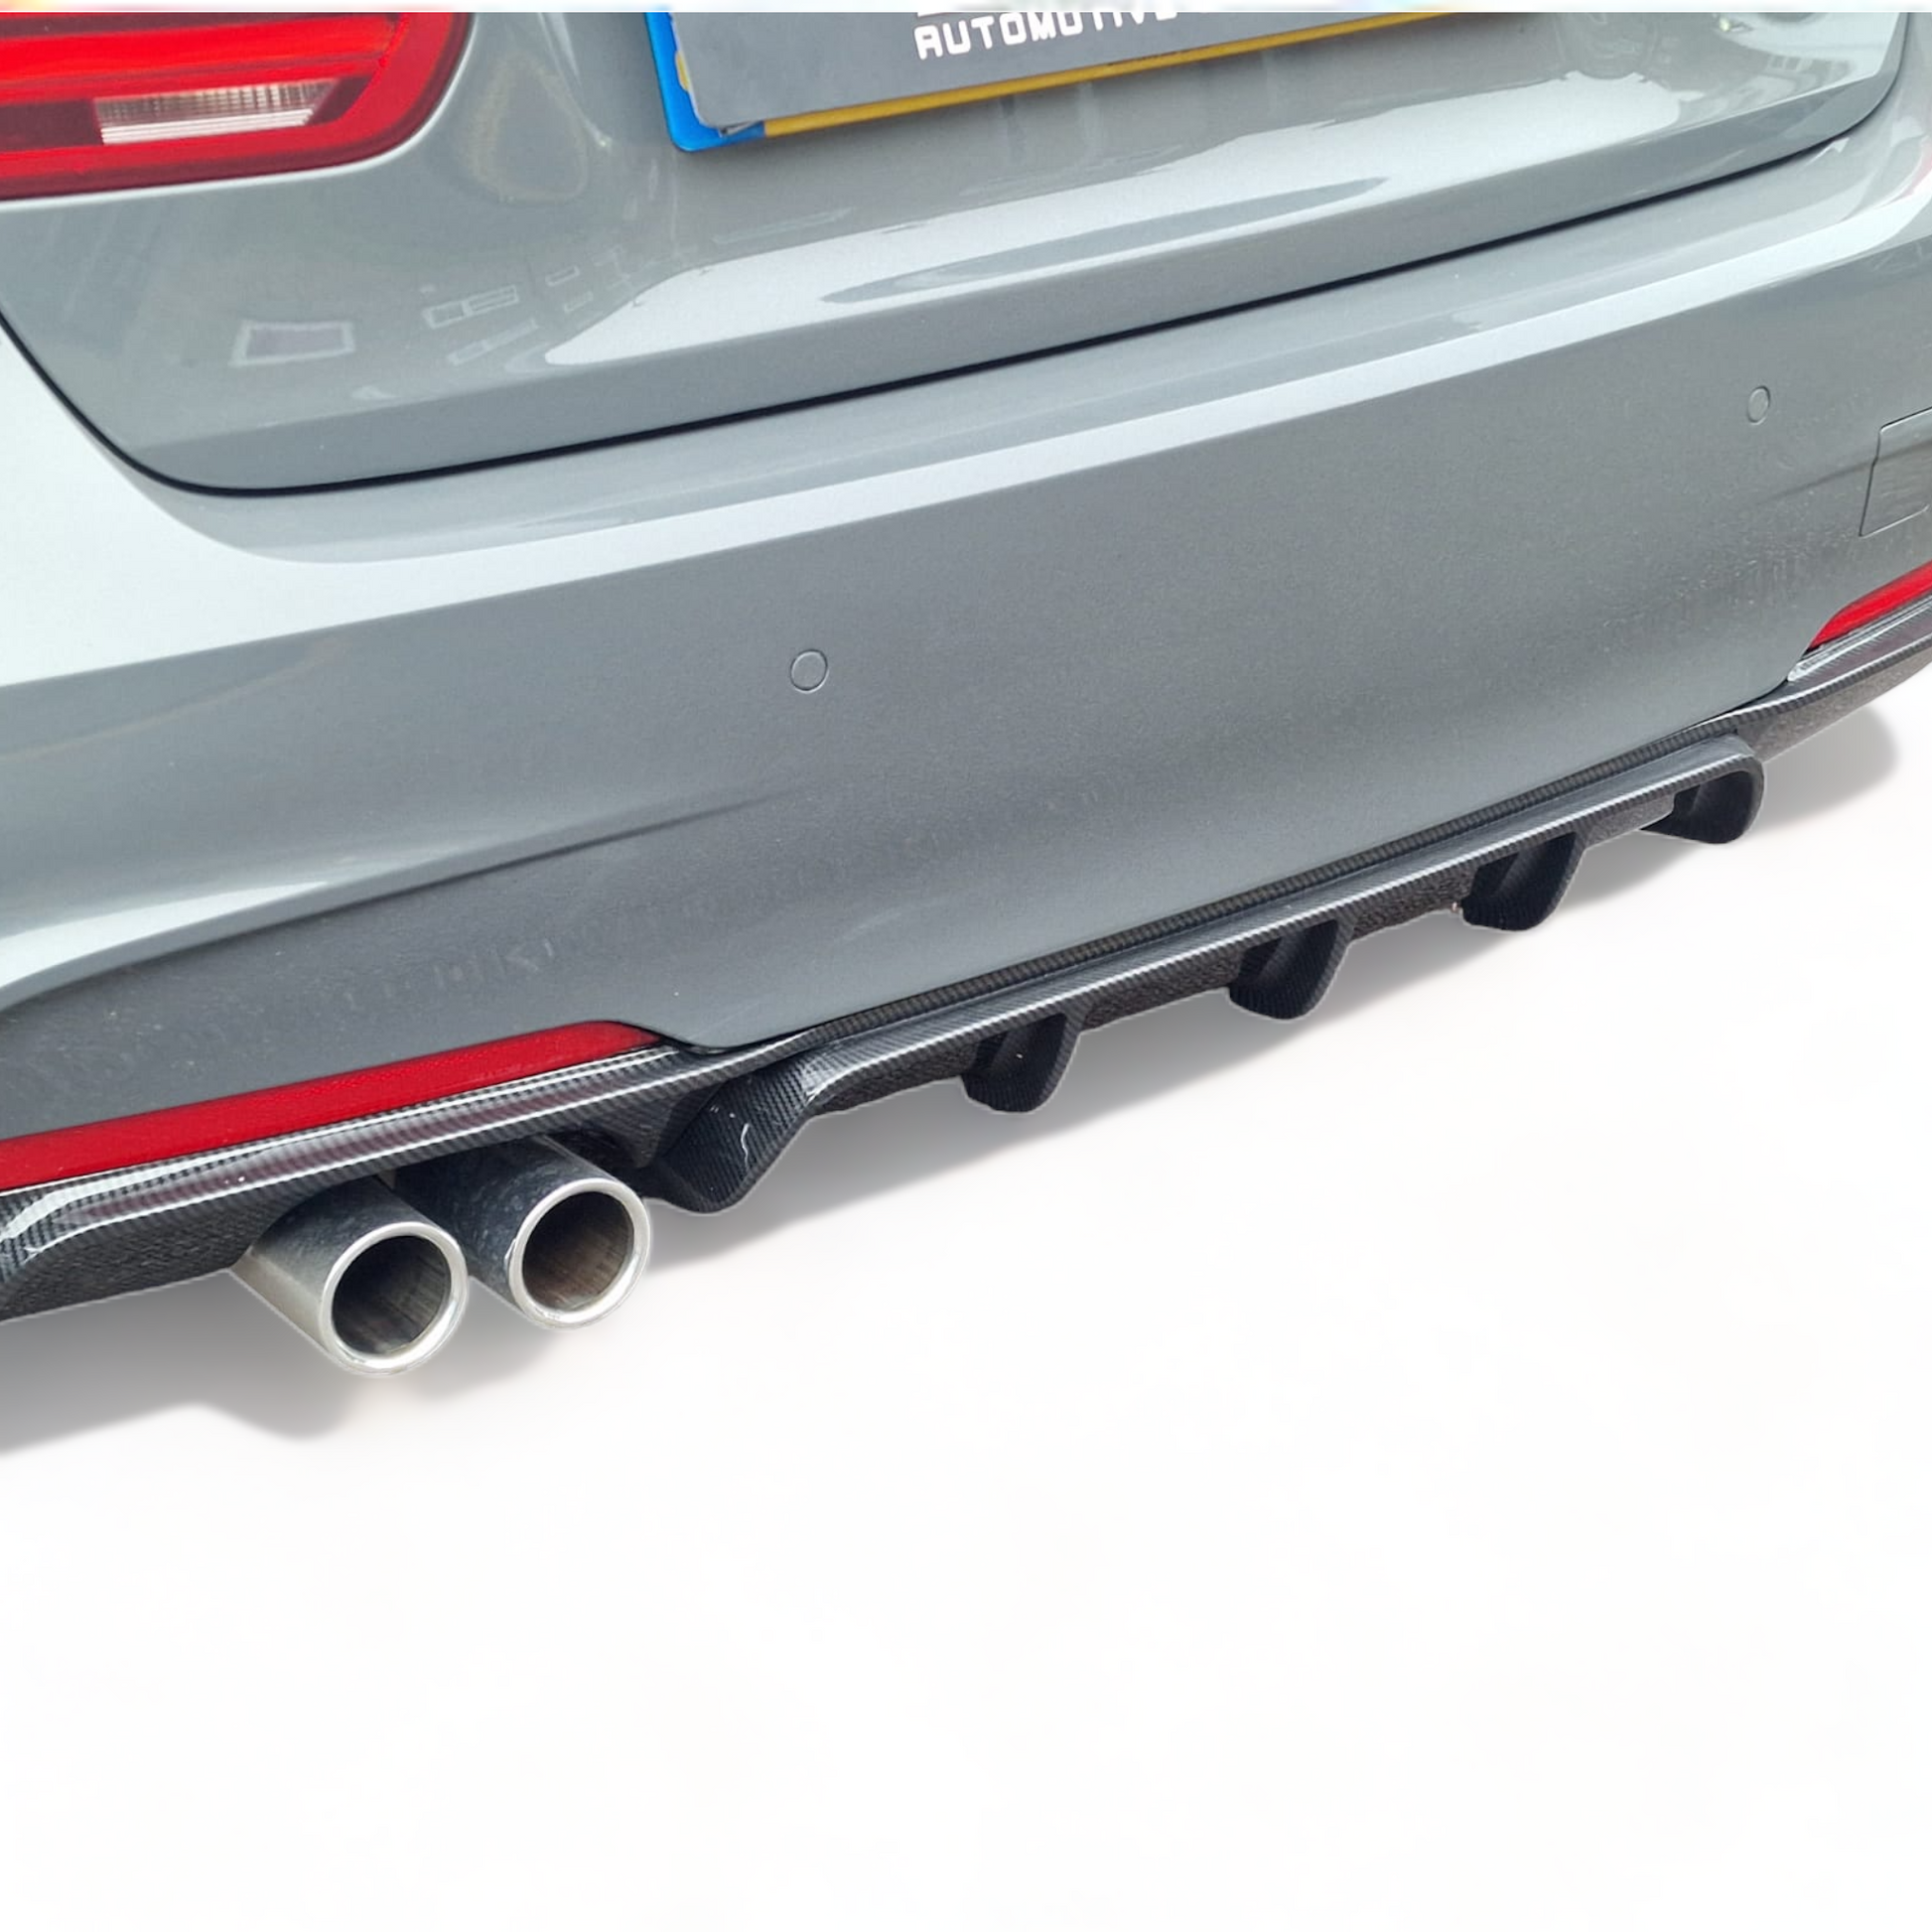 BMW 3 Series F30 kit carbon performance styling full body kit